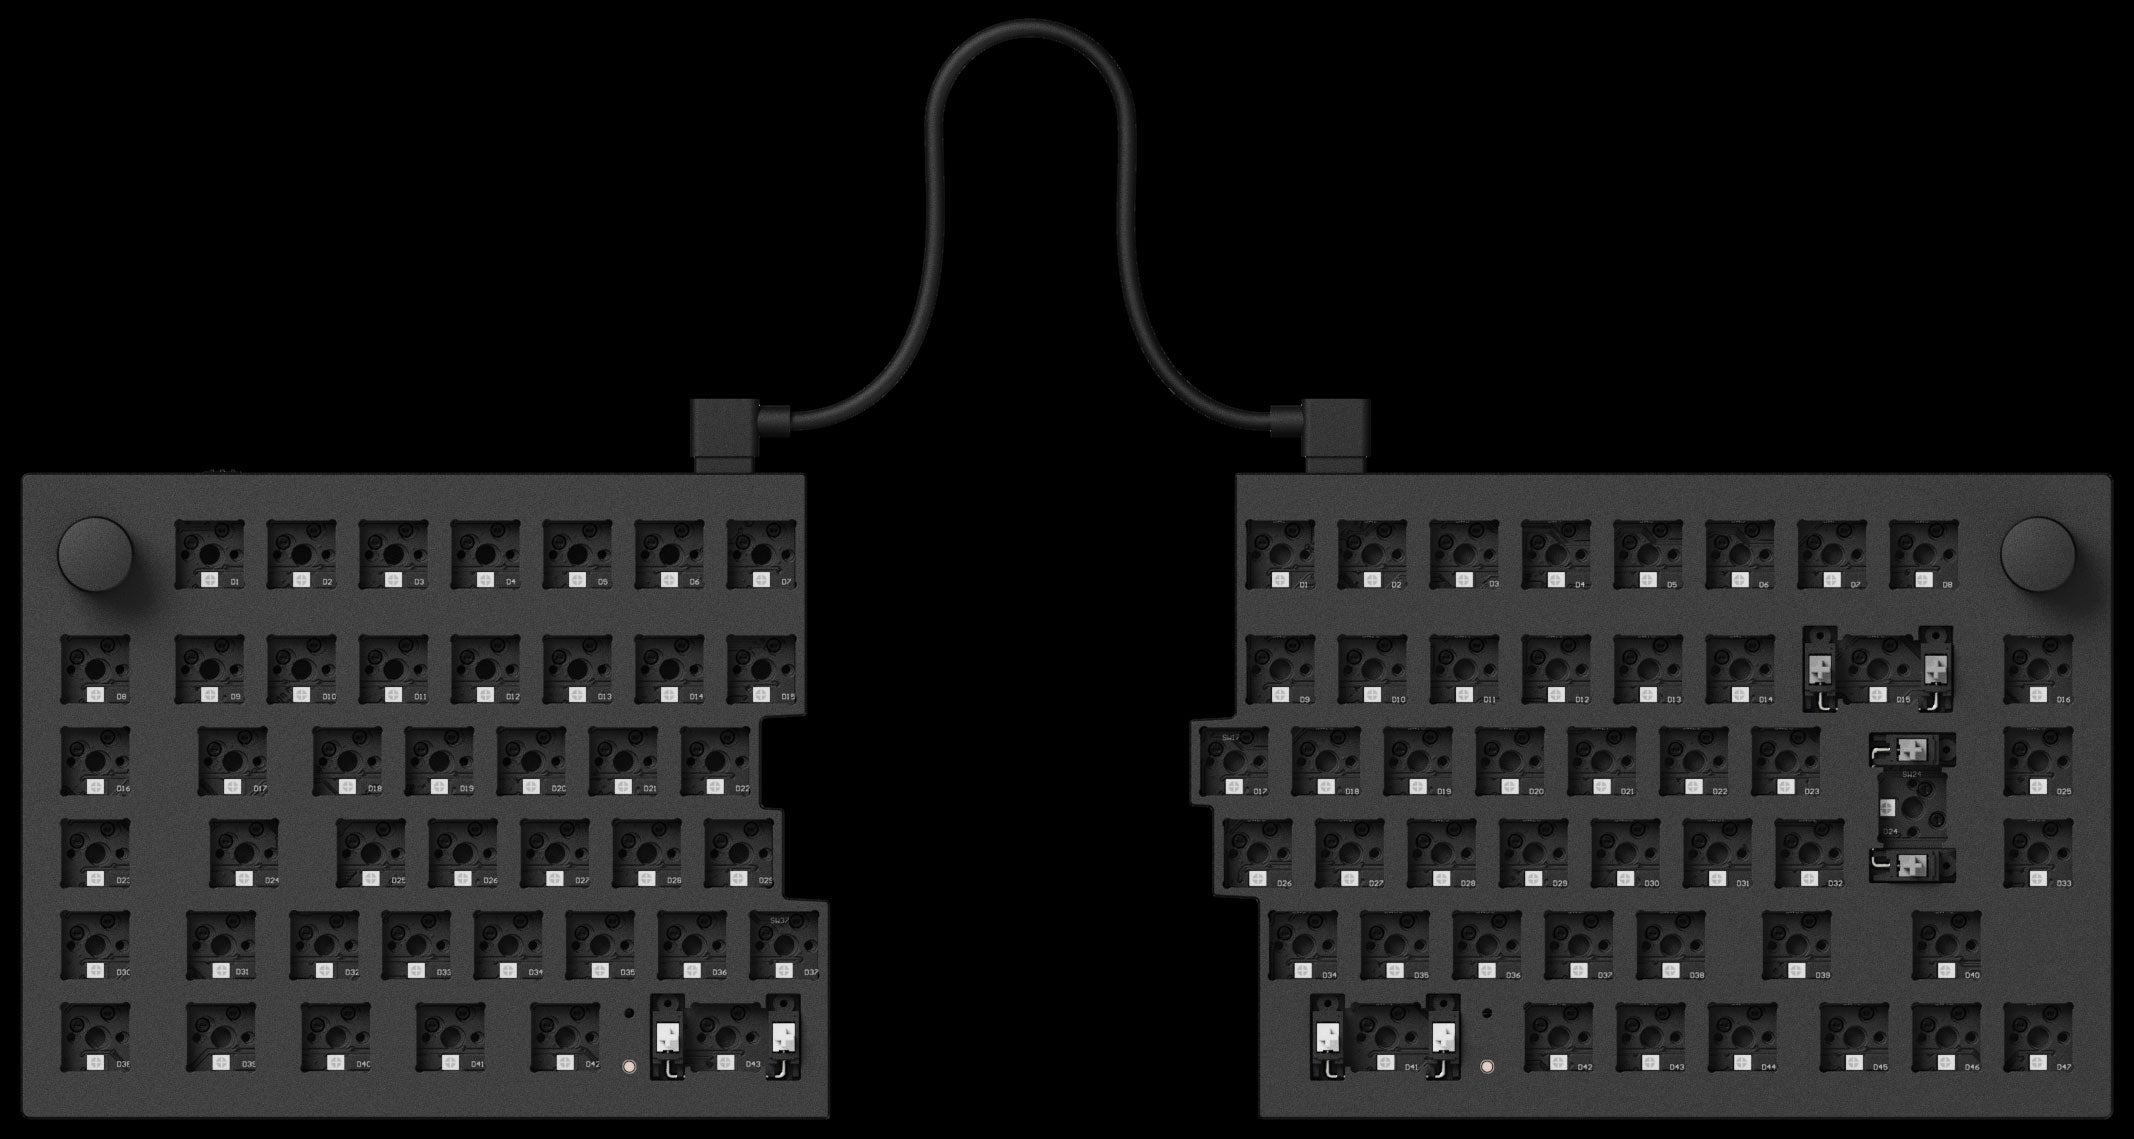 Barebone ISO layout of QMK VIA screen capture of Rotary encoder function of Keychron Q11 75% Layout Split Custom Mechanical Keyboard